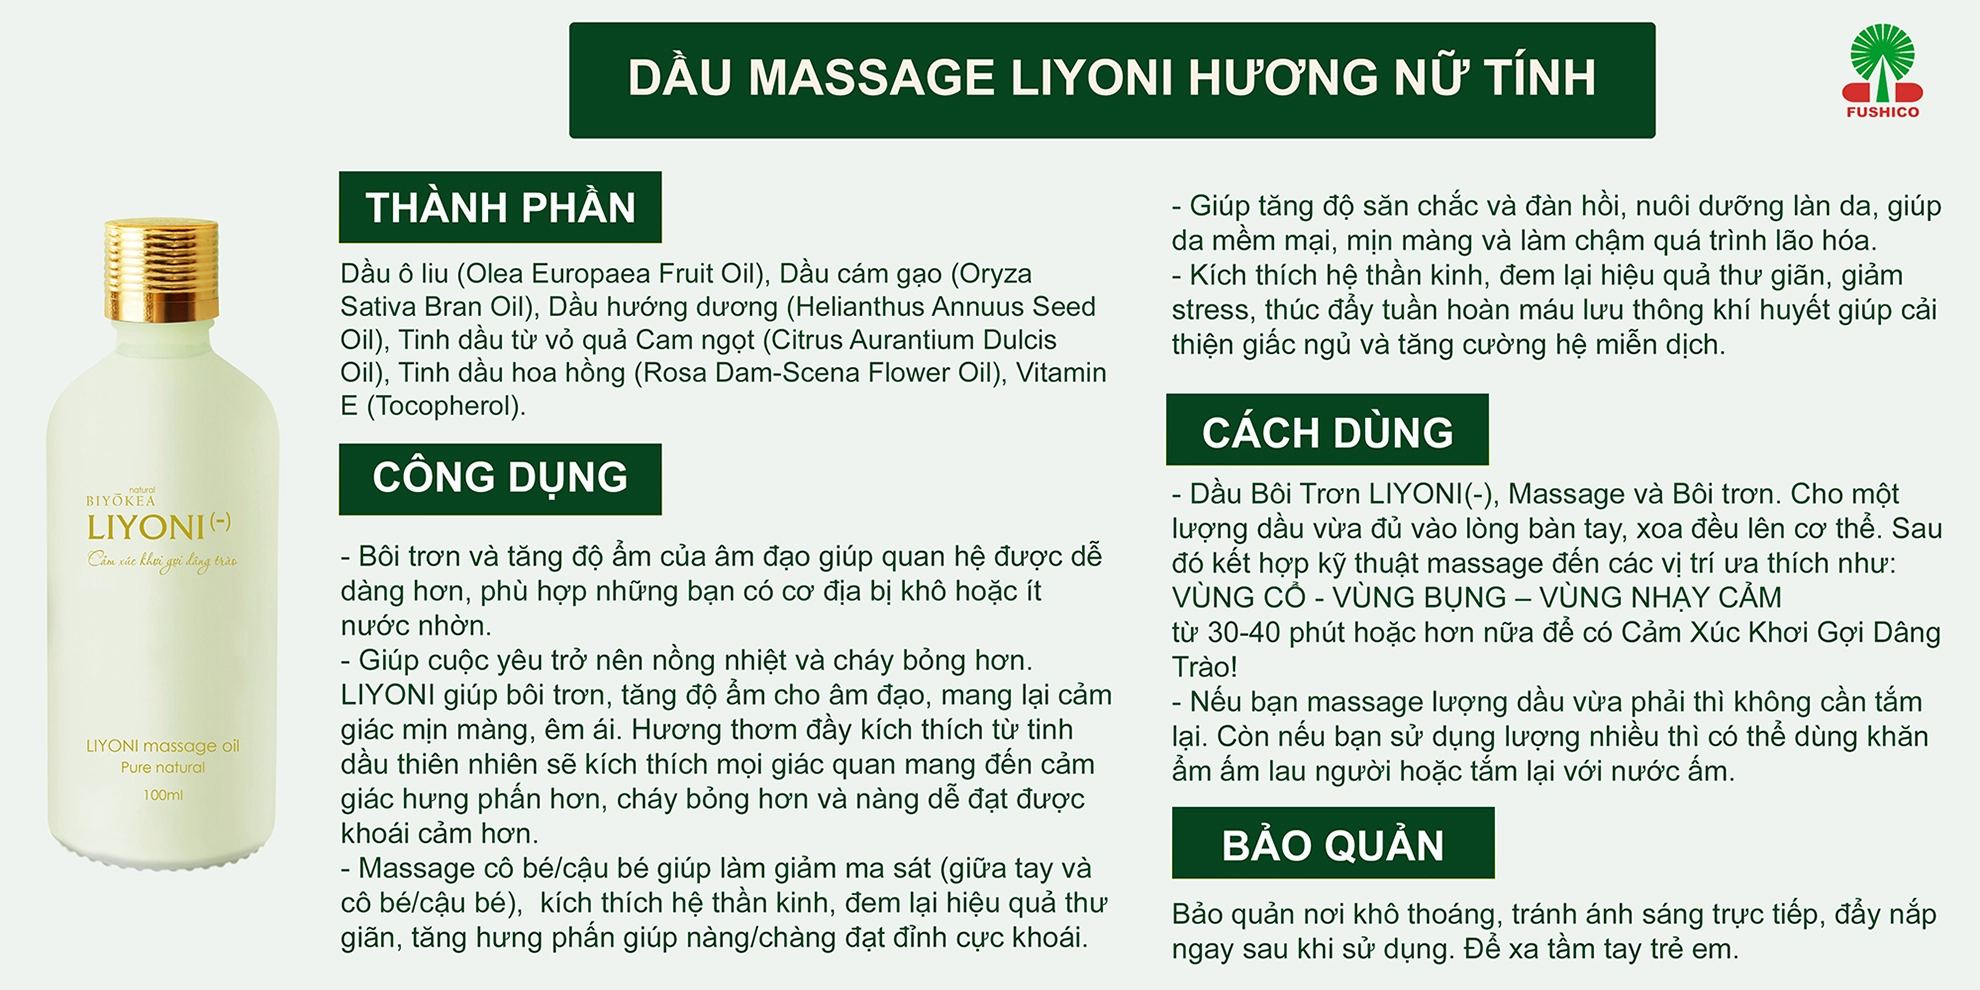 https://tadalafil.vn/dau-boi-tron-massage-liyoni